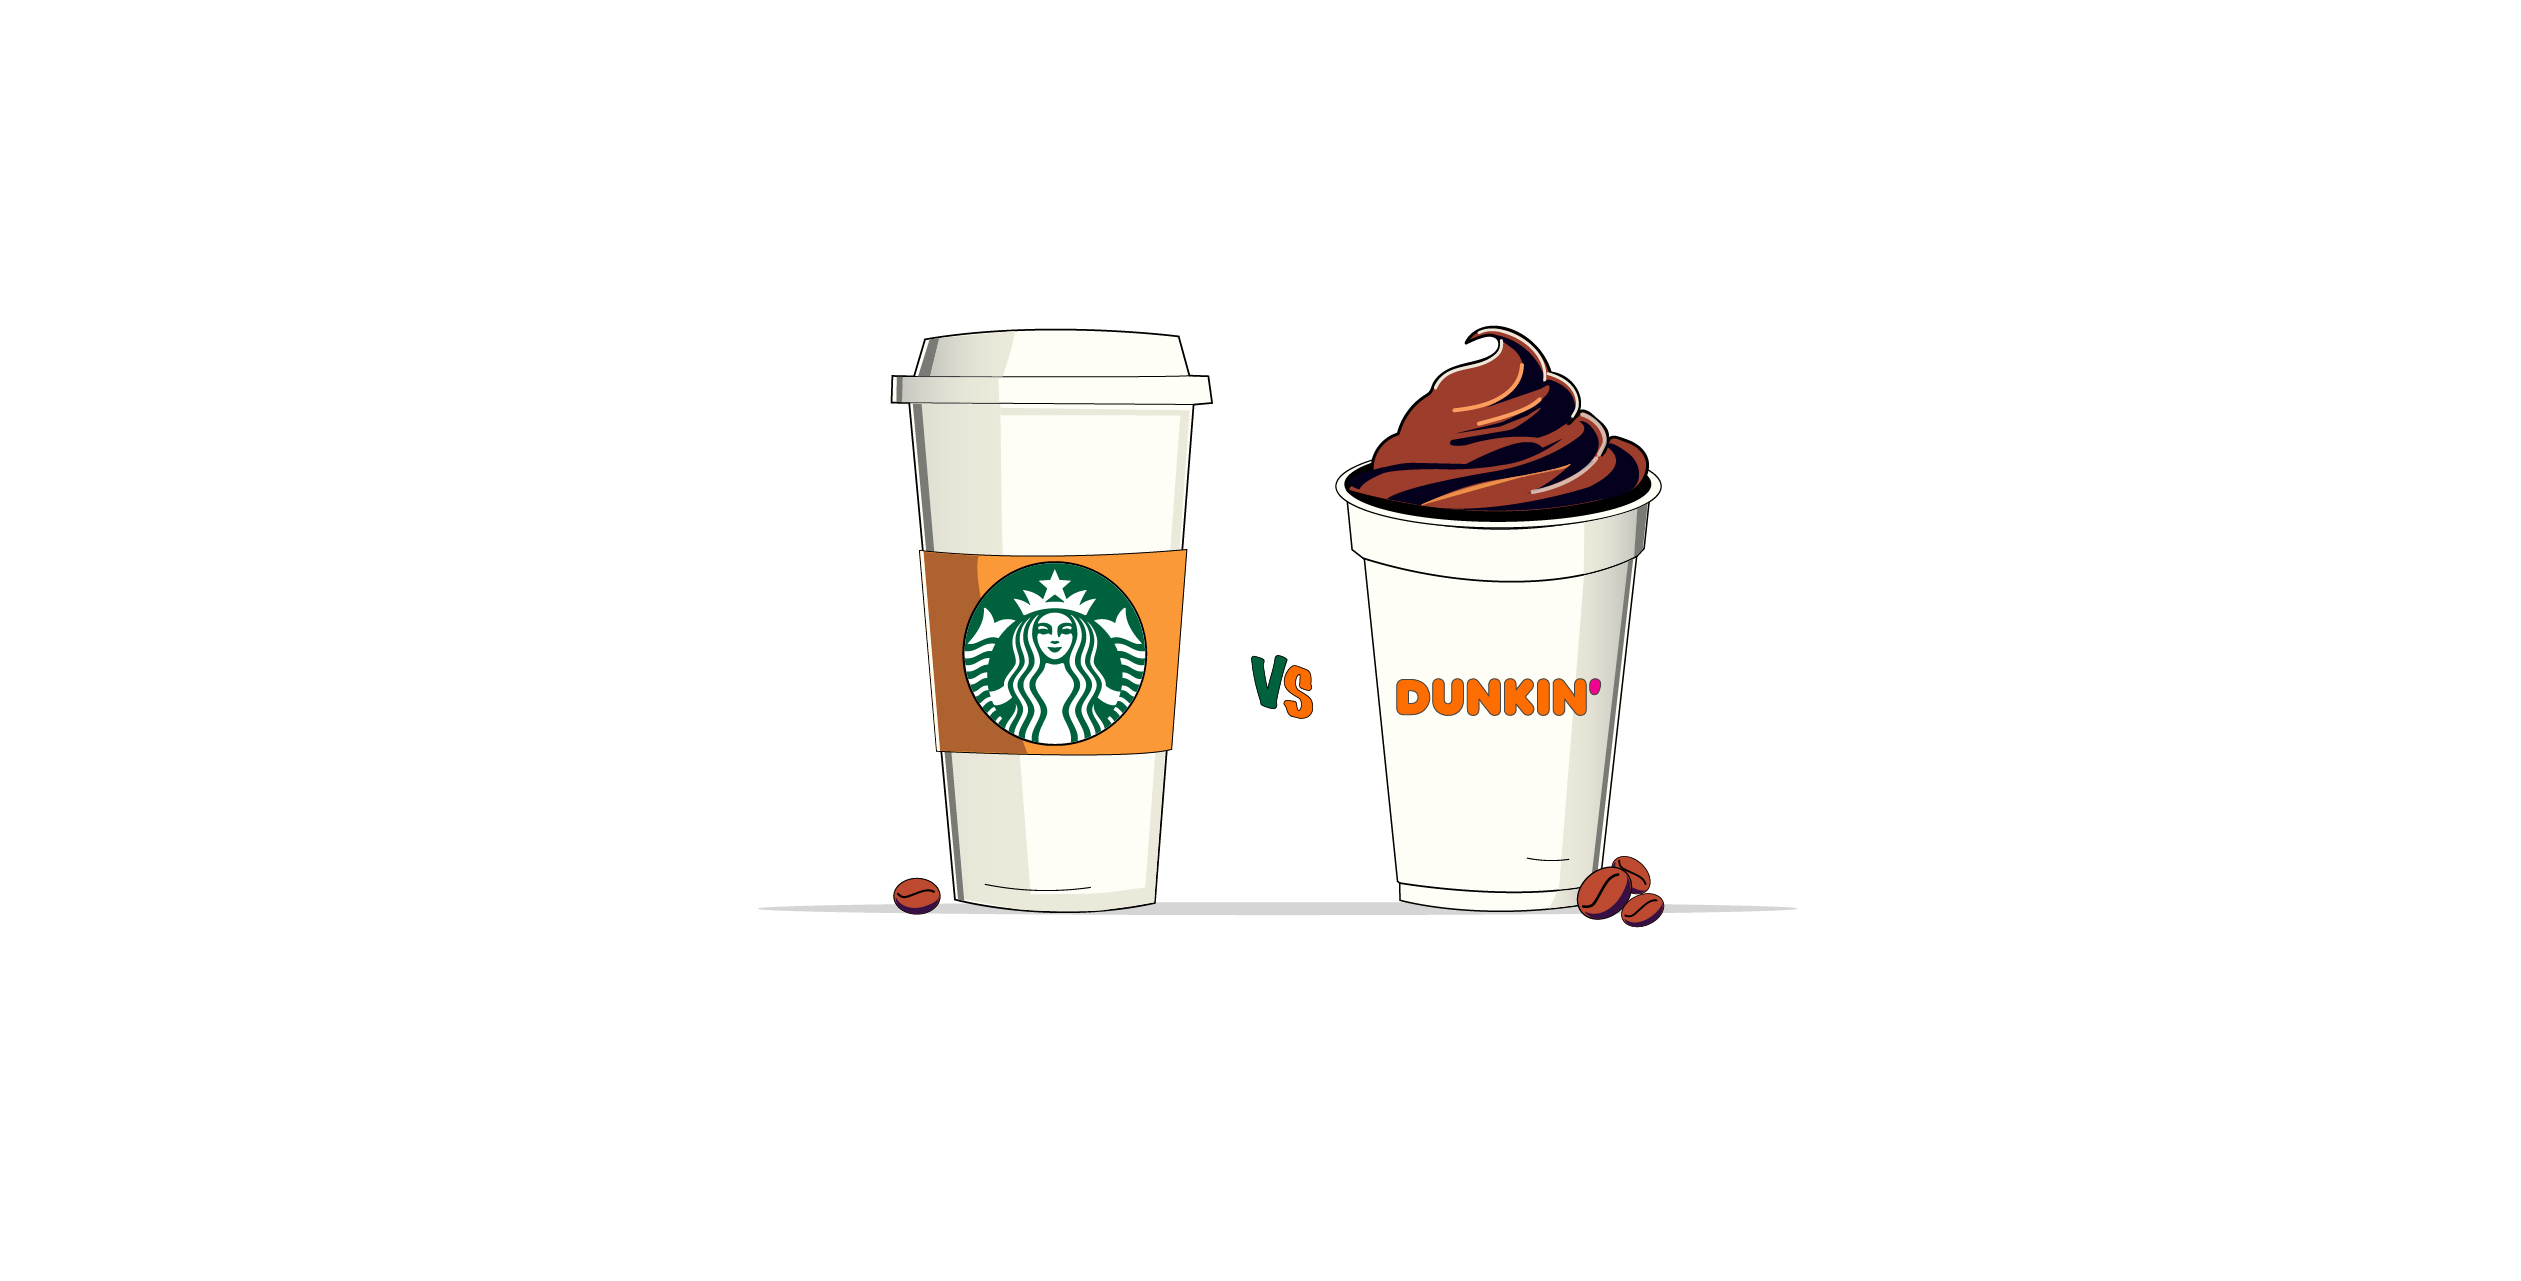 Analysis of Dunkin vs. Starbucks